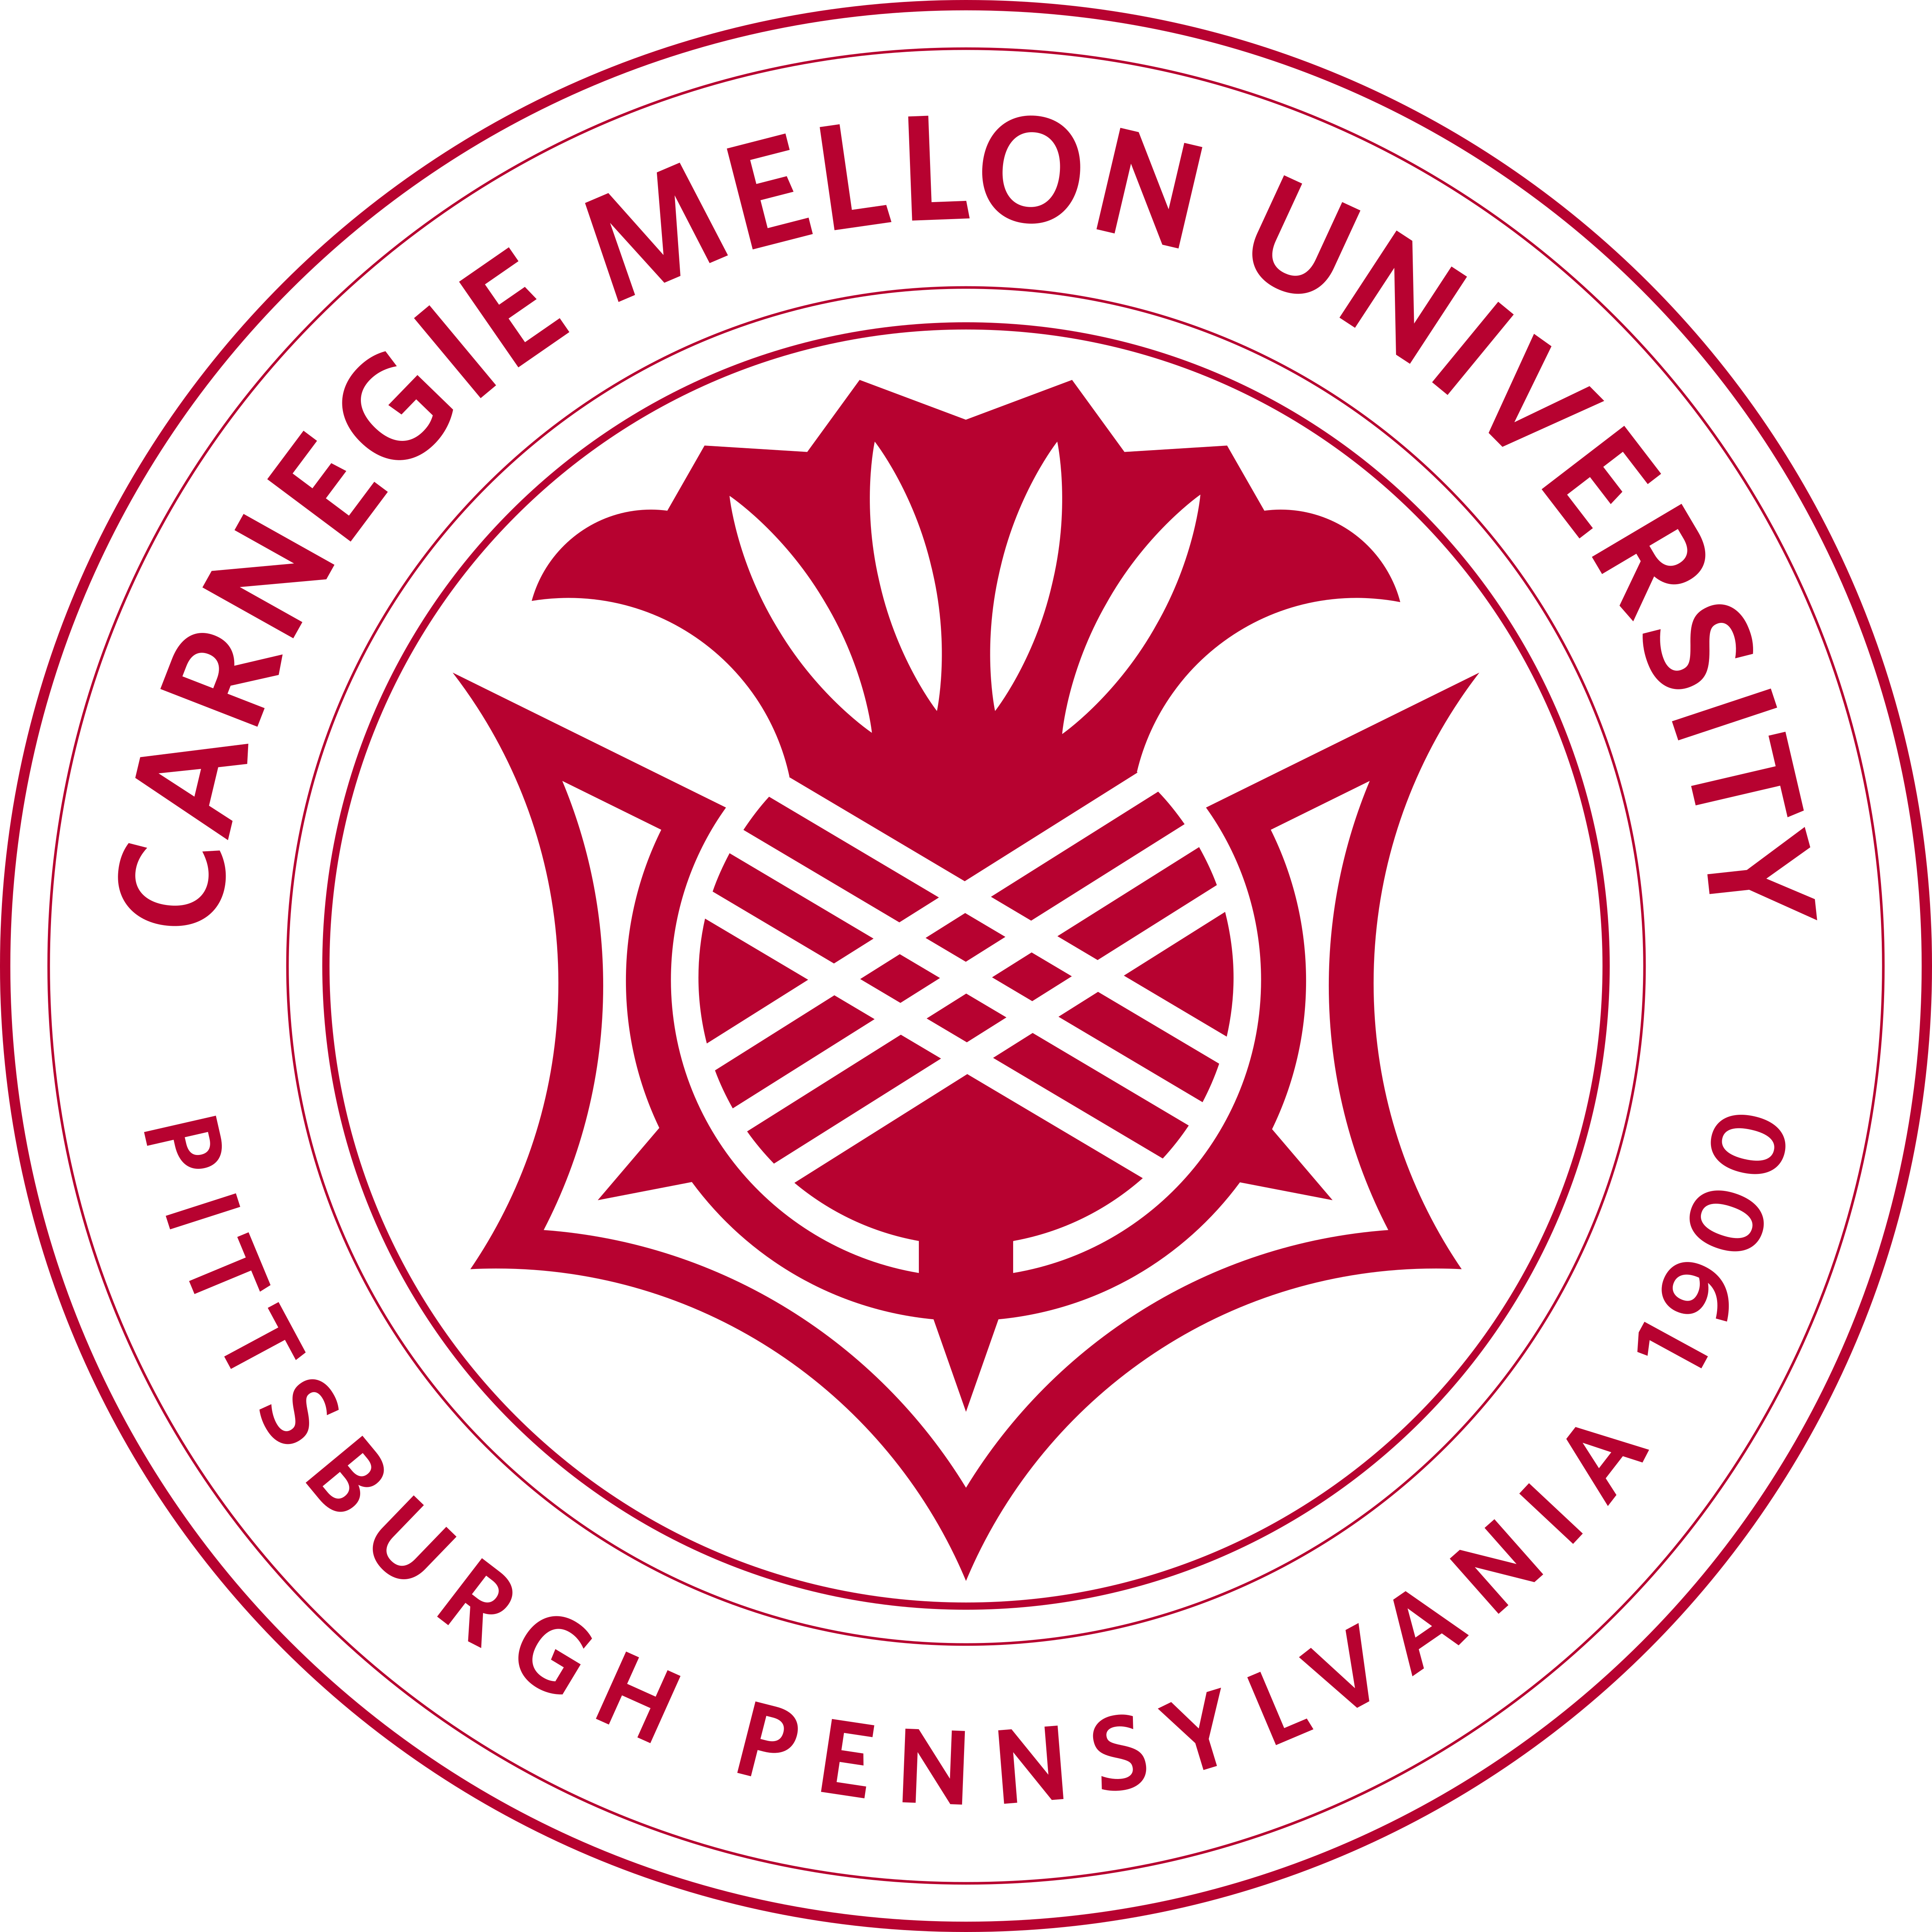 Carnegie Mellon University – Logos Download